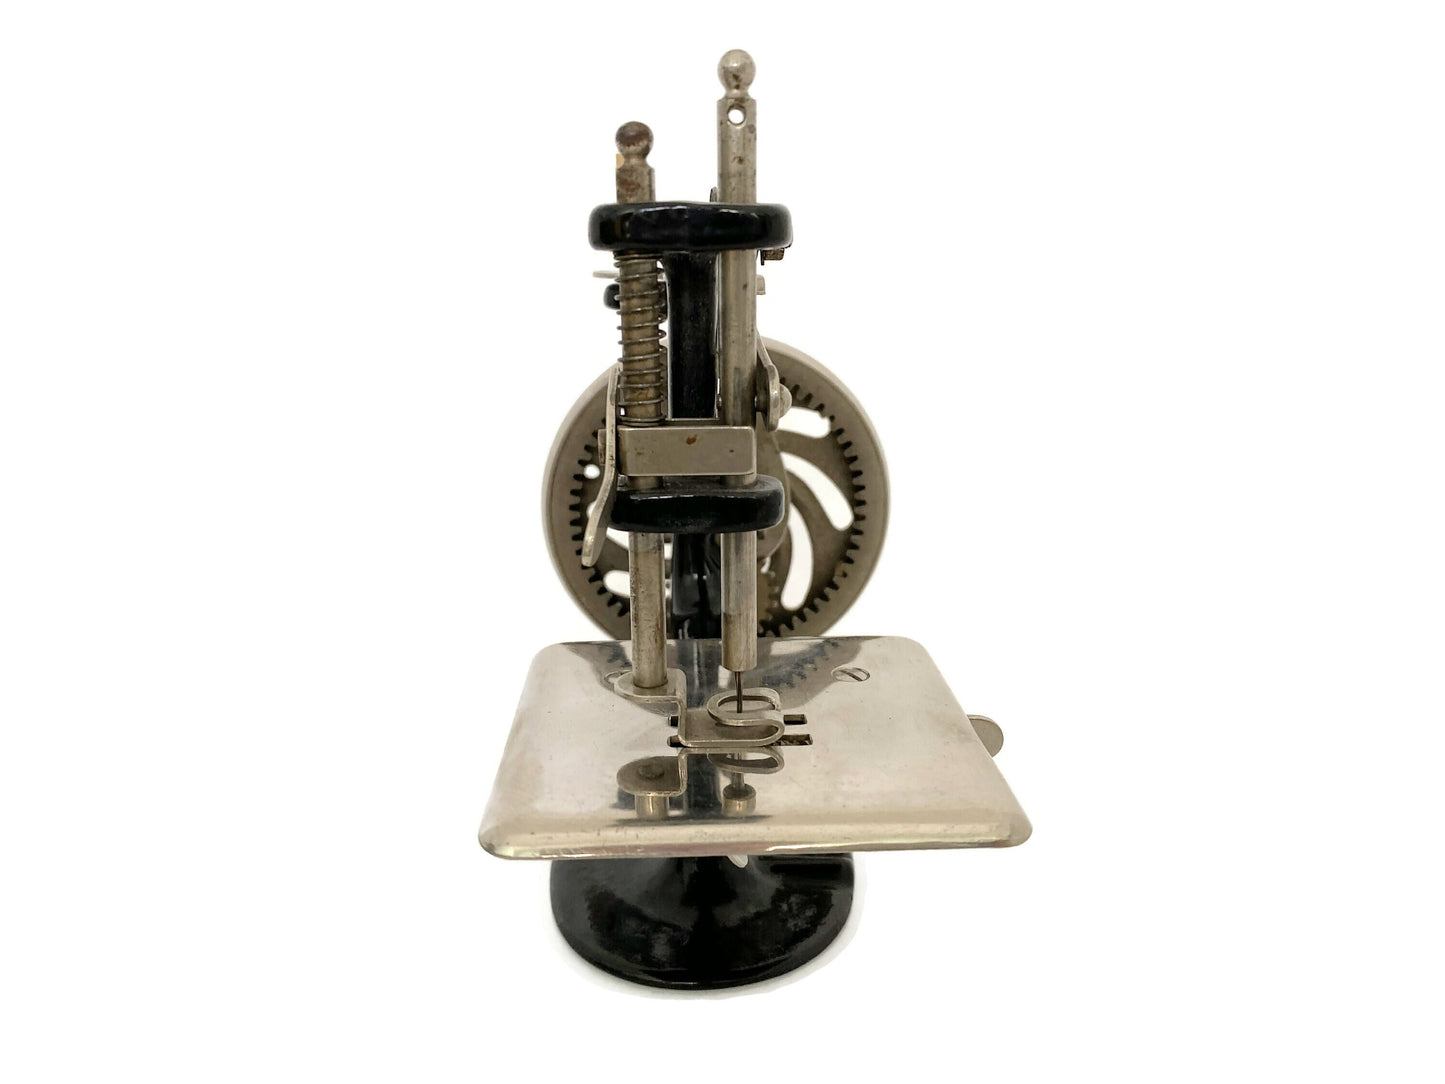 1930s Singer Sewing Machine Model 20